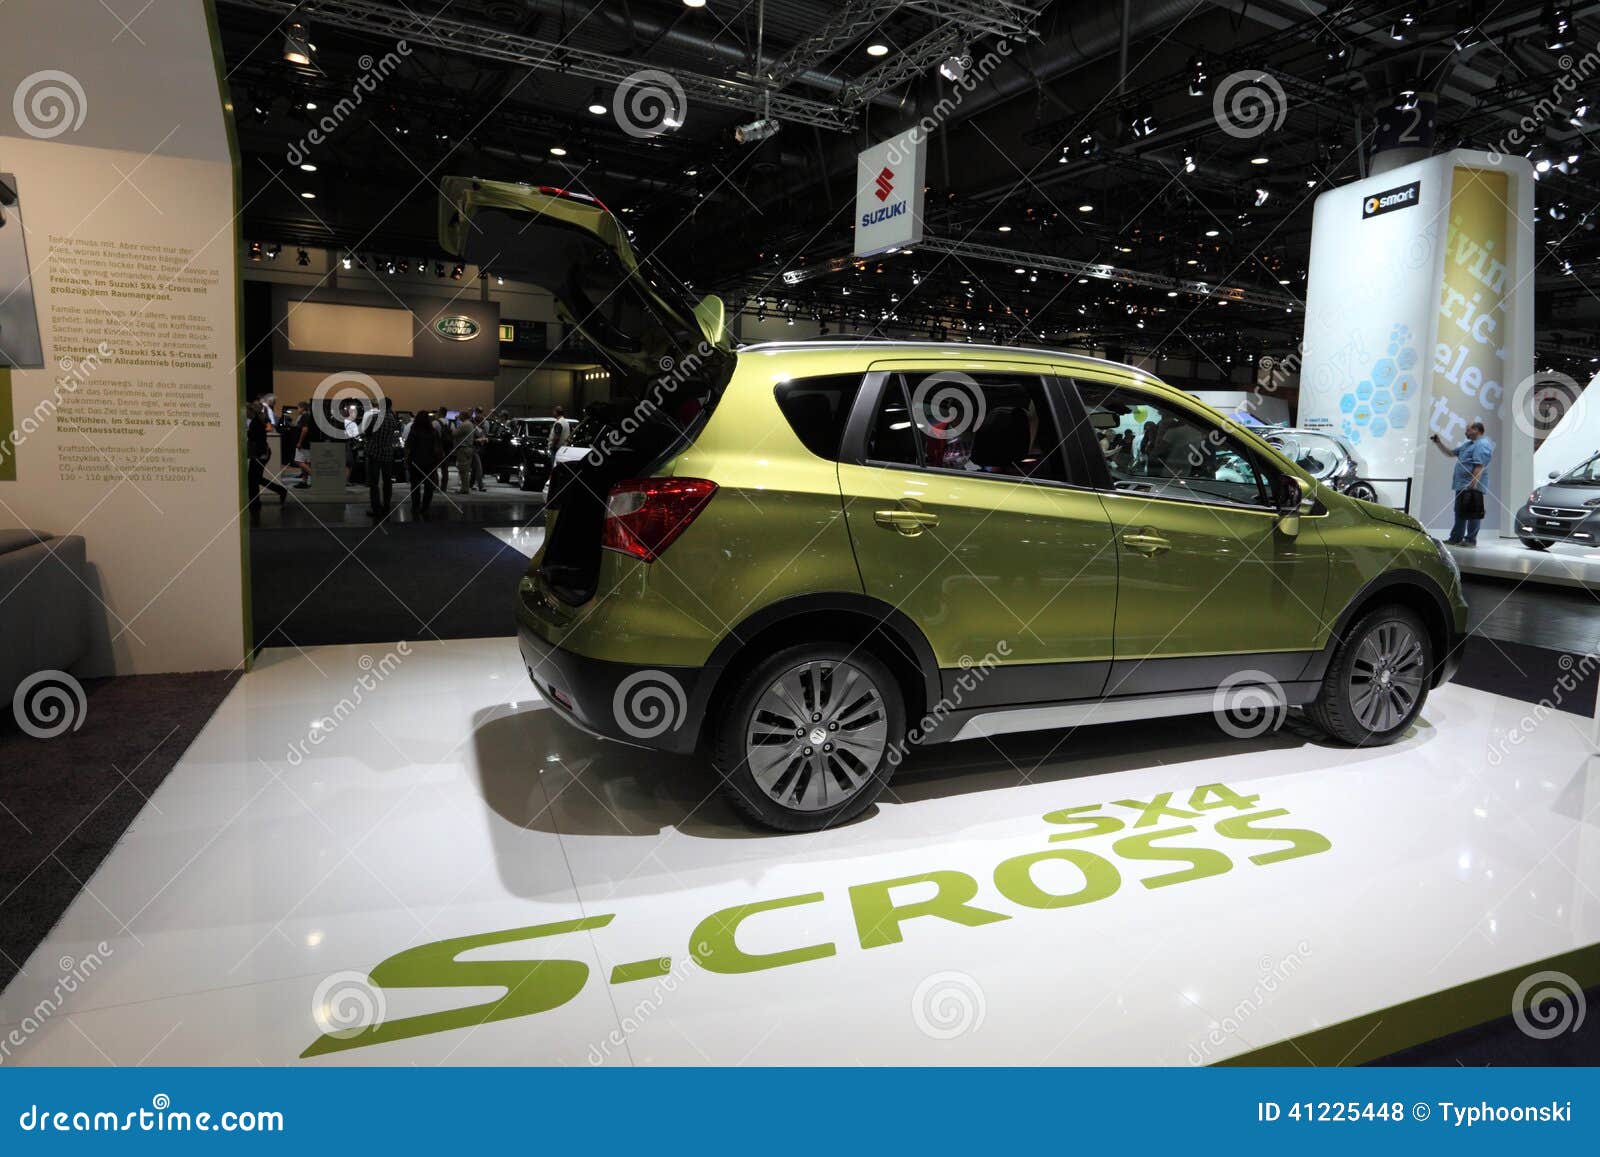 Suzuki SX4 S-Cross at Auto Mobile International Editorial Stock Photo -  Image of germany, auto: 41225448